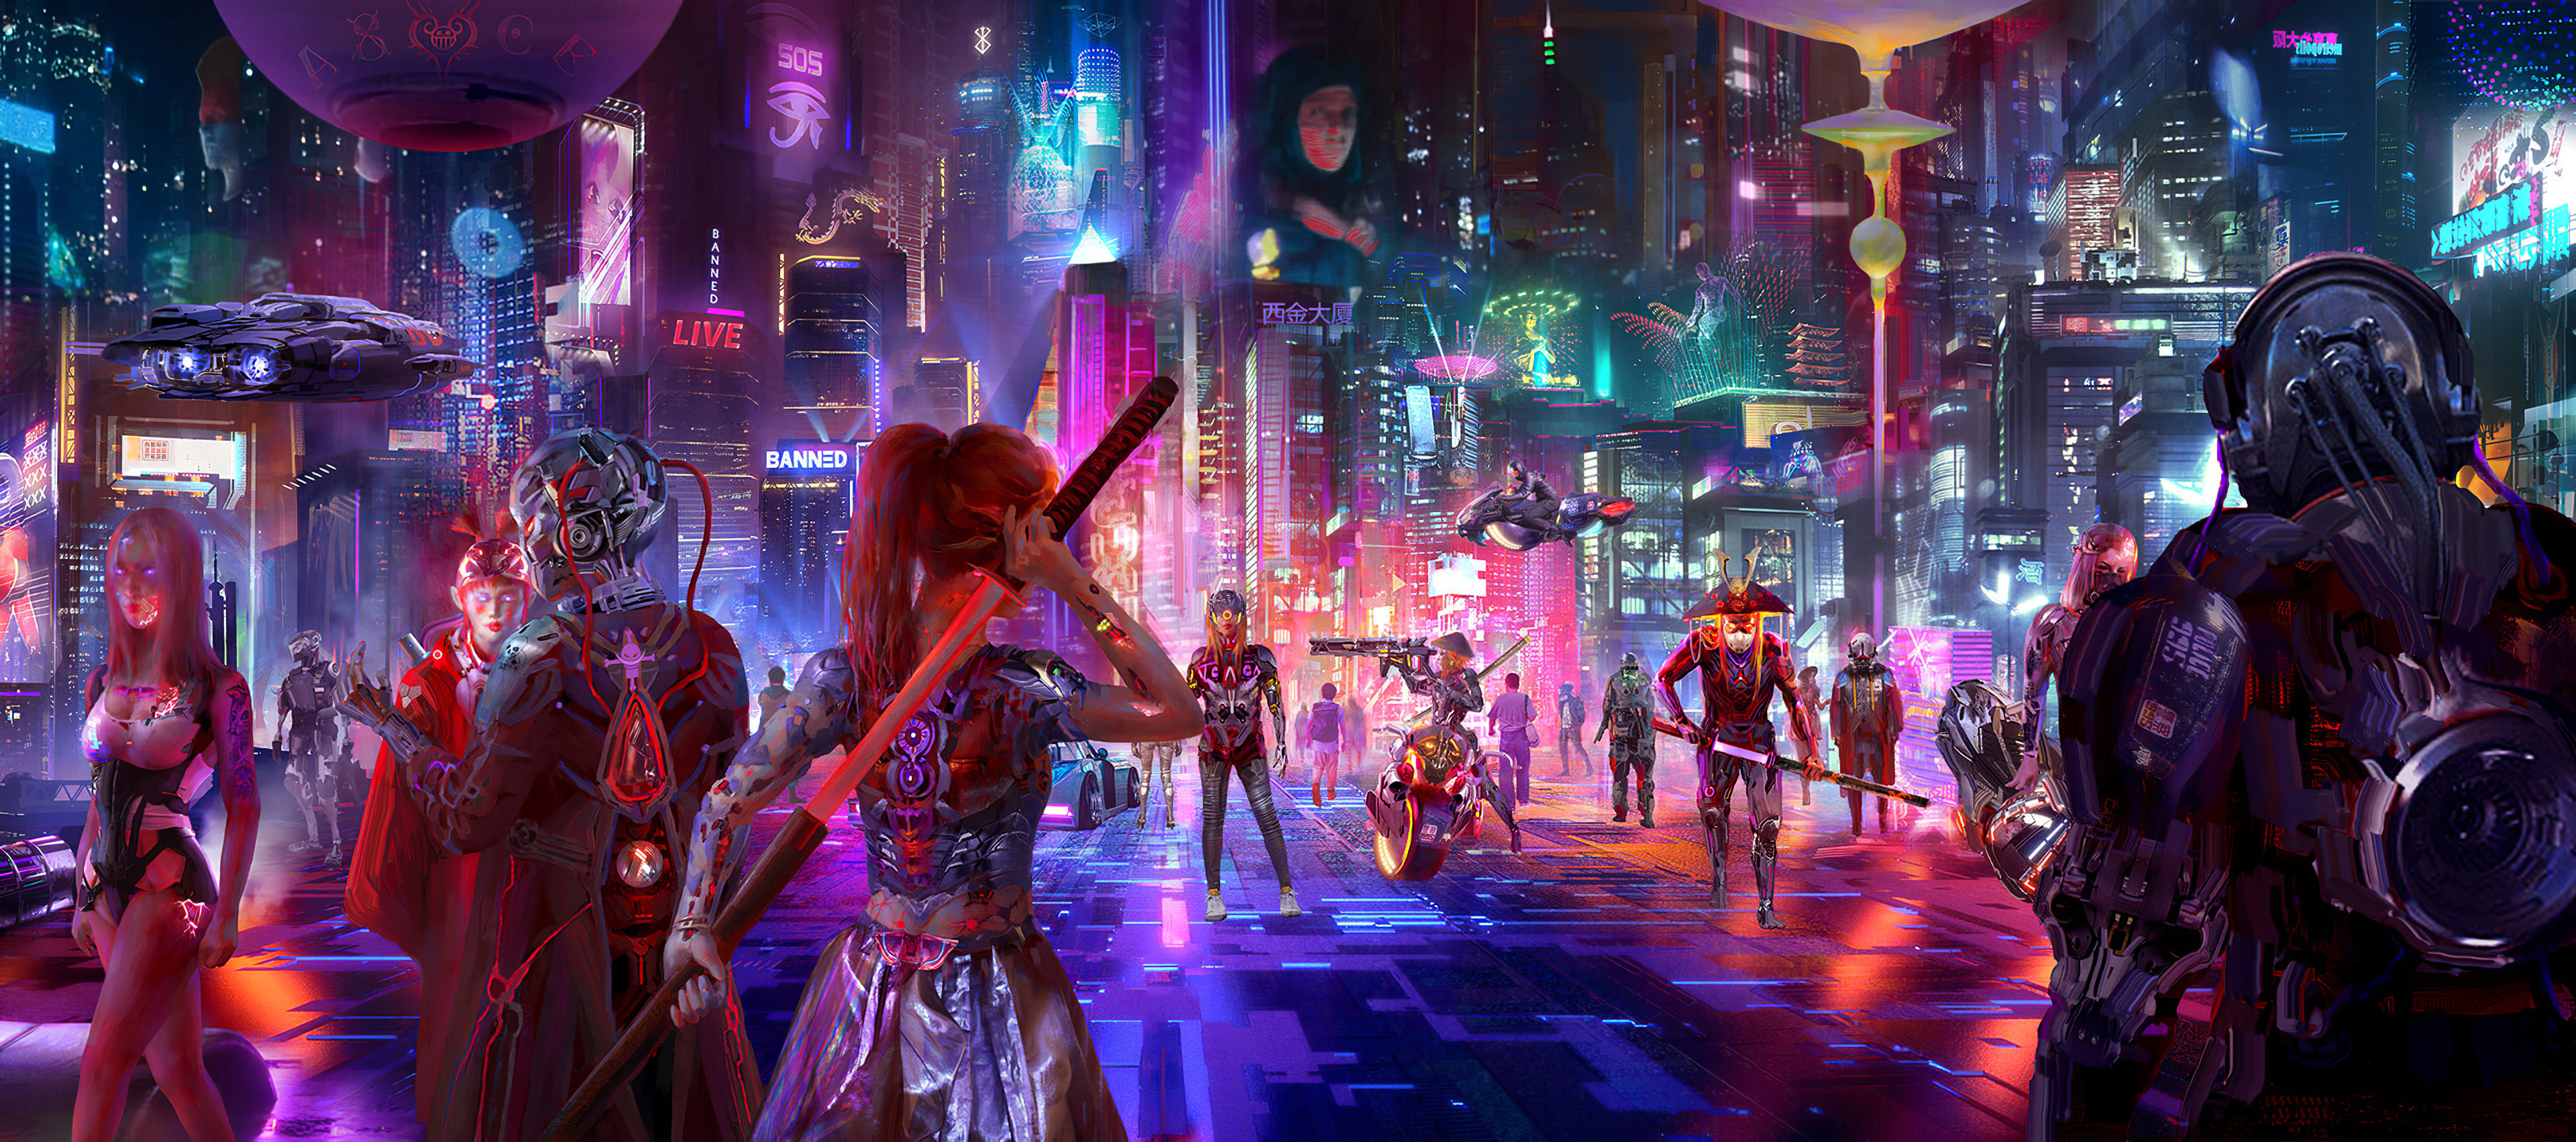 Cyberpunk City 4k Wallpaper,HD Artist Wallpapers,4k Wallpapers